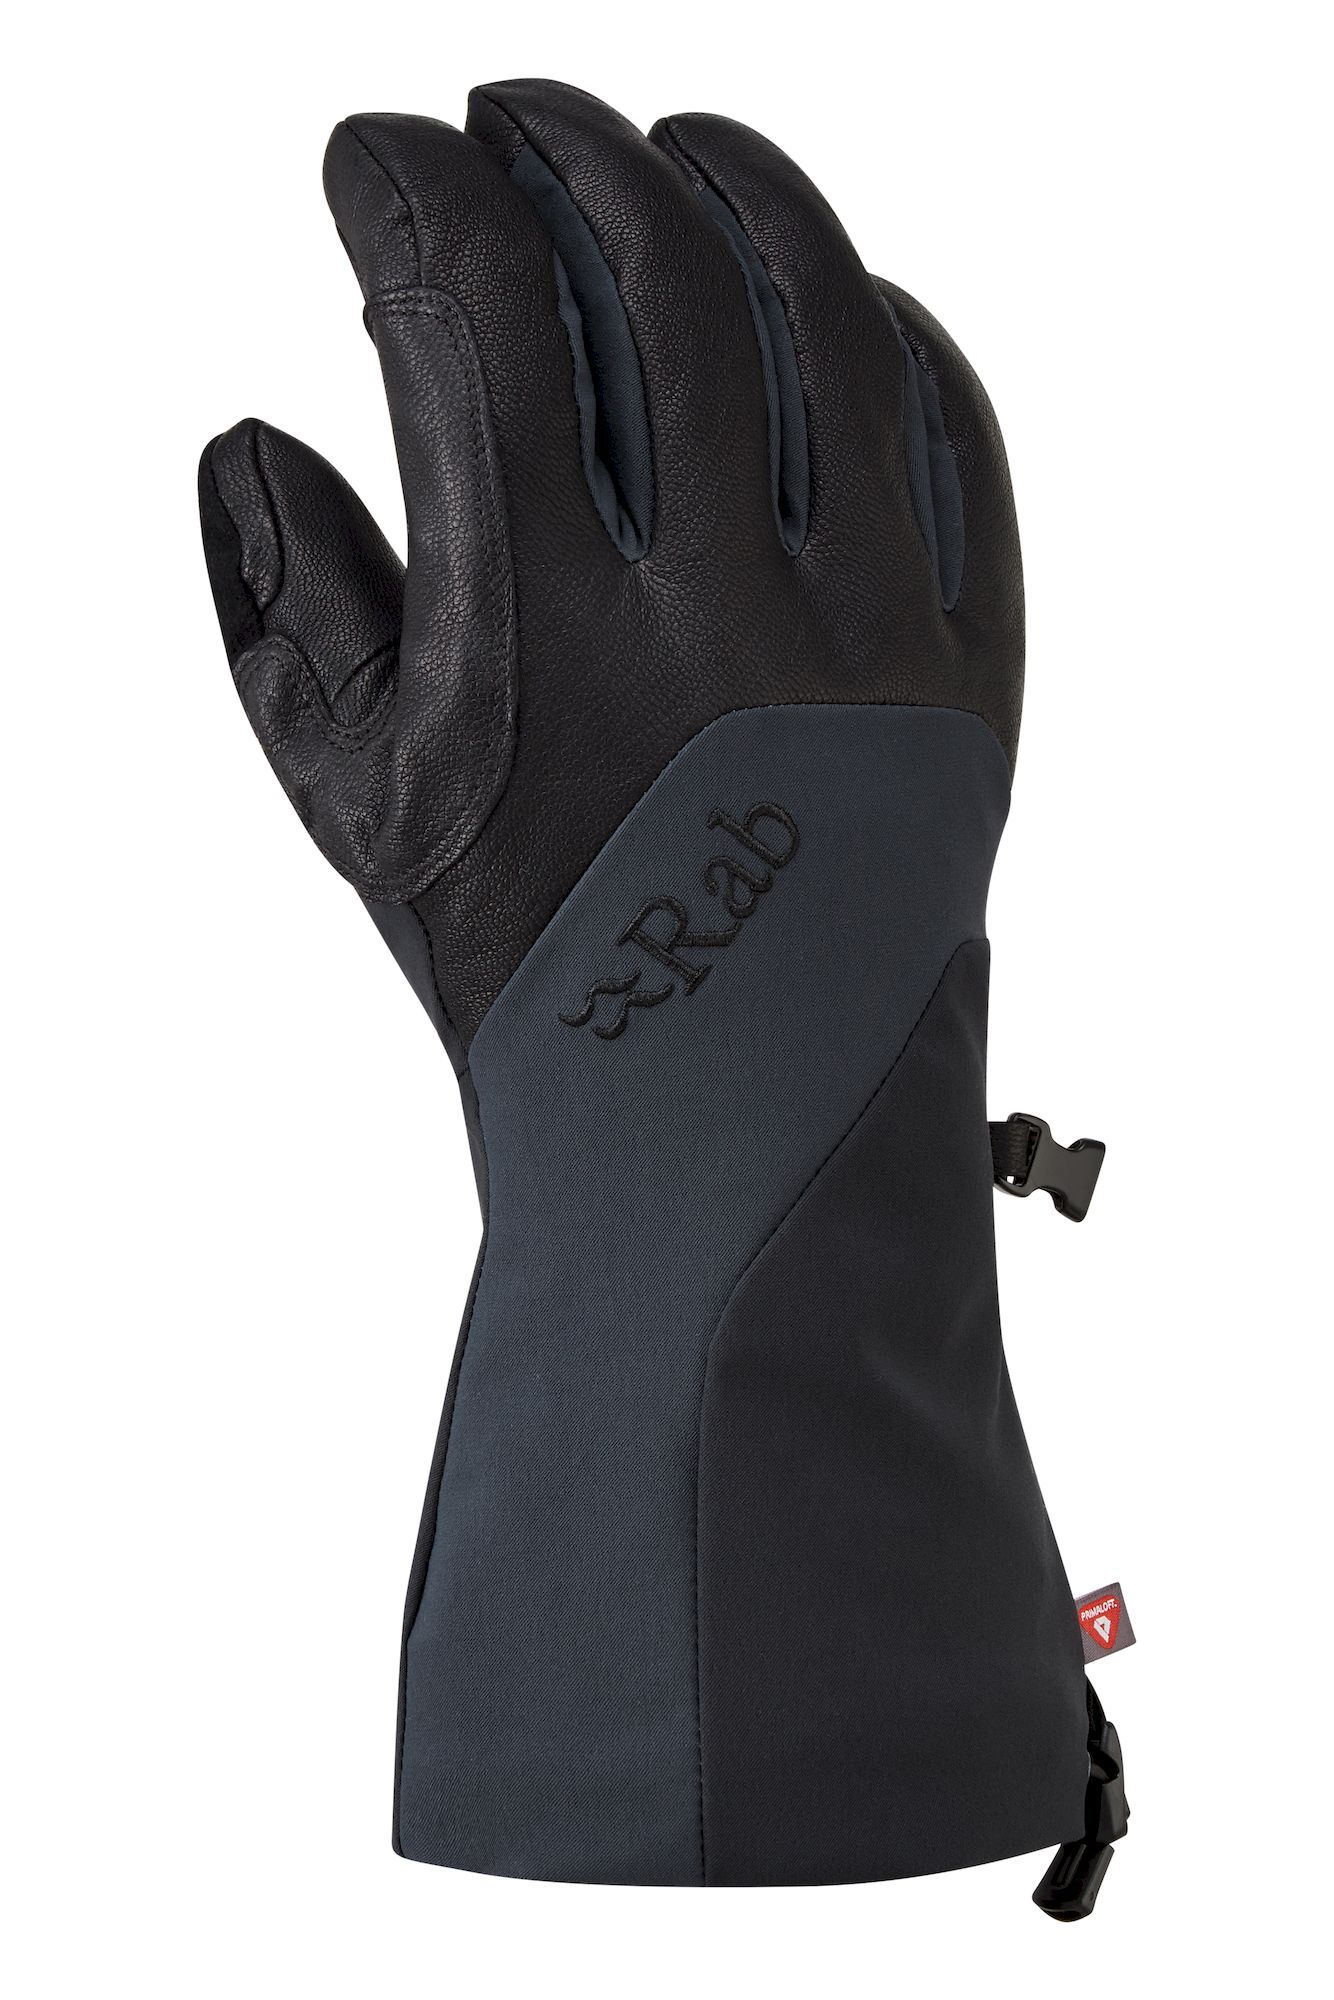 Rab Khroma Freeride GTX Gloves - Guantes de esquí - Hombre | Hardloop